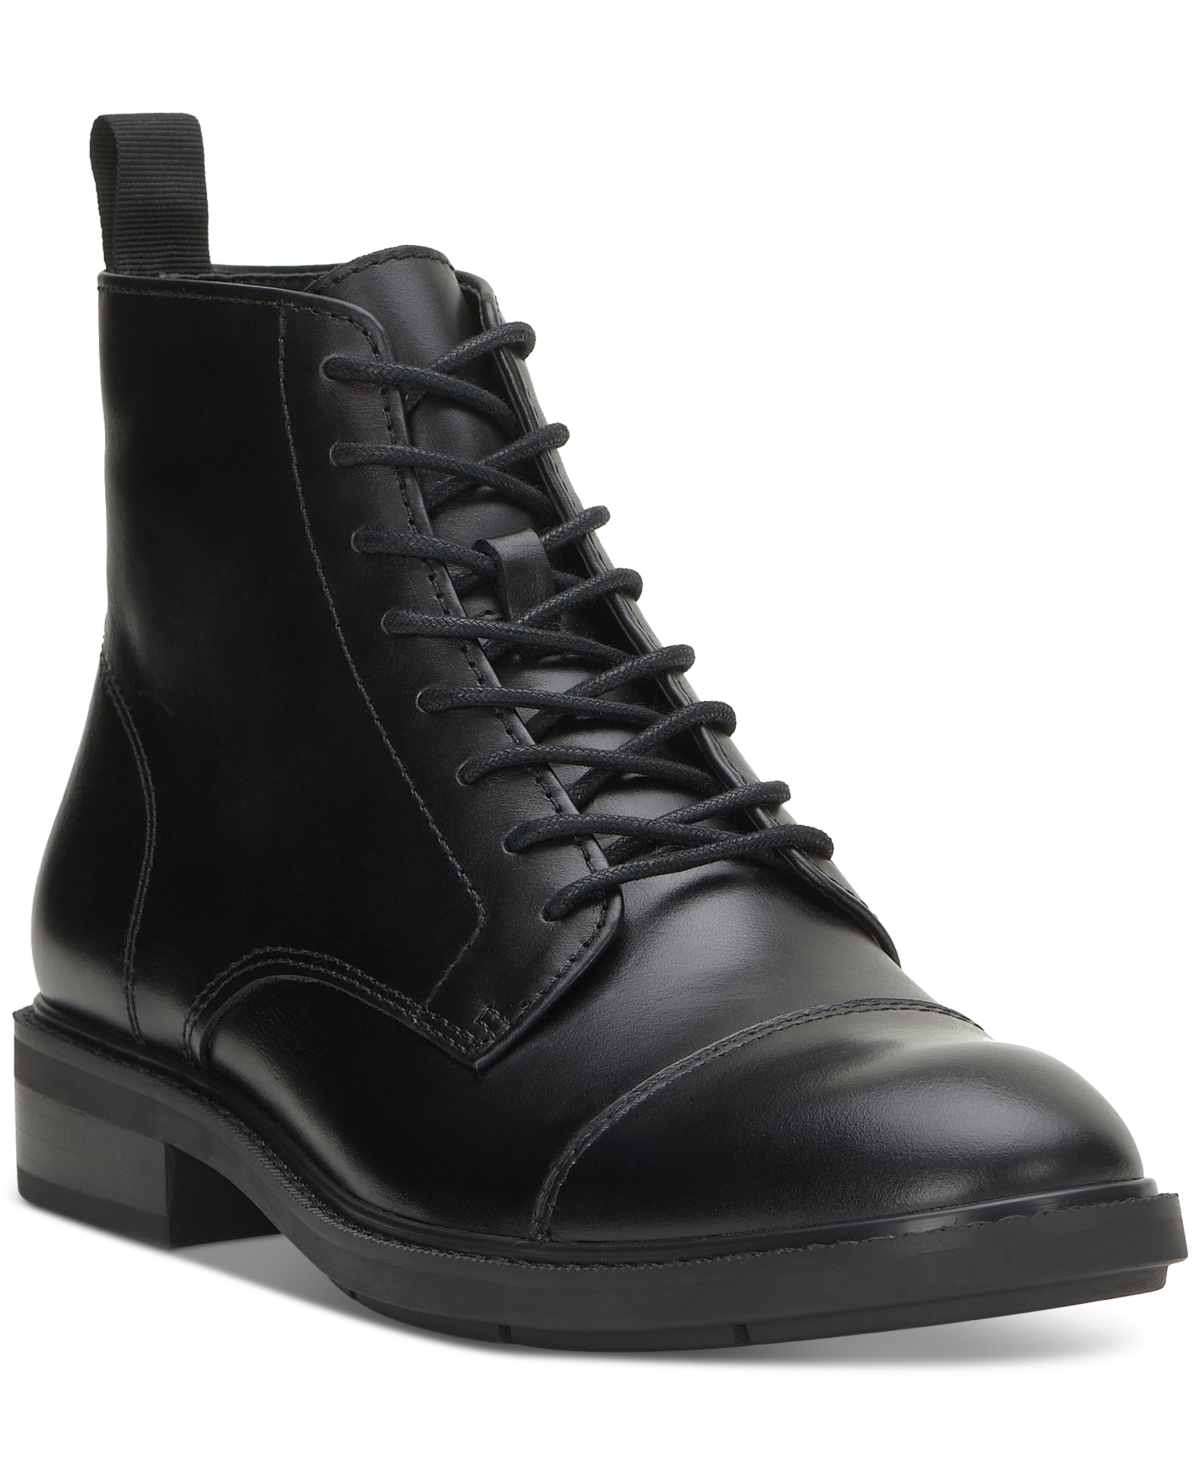 Men's Ferko Lace Up Boot - Black